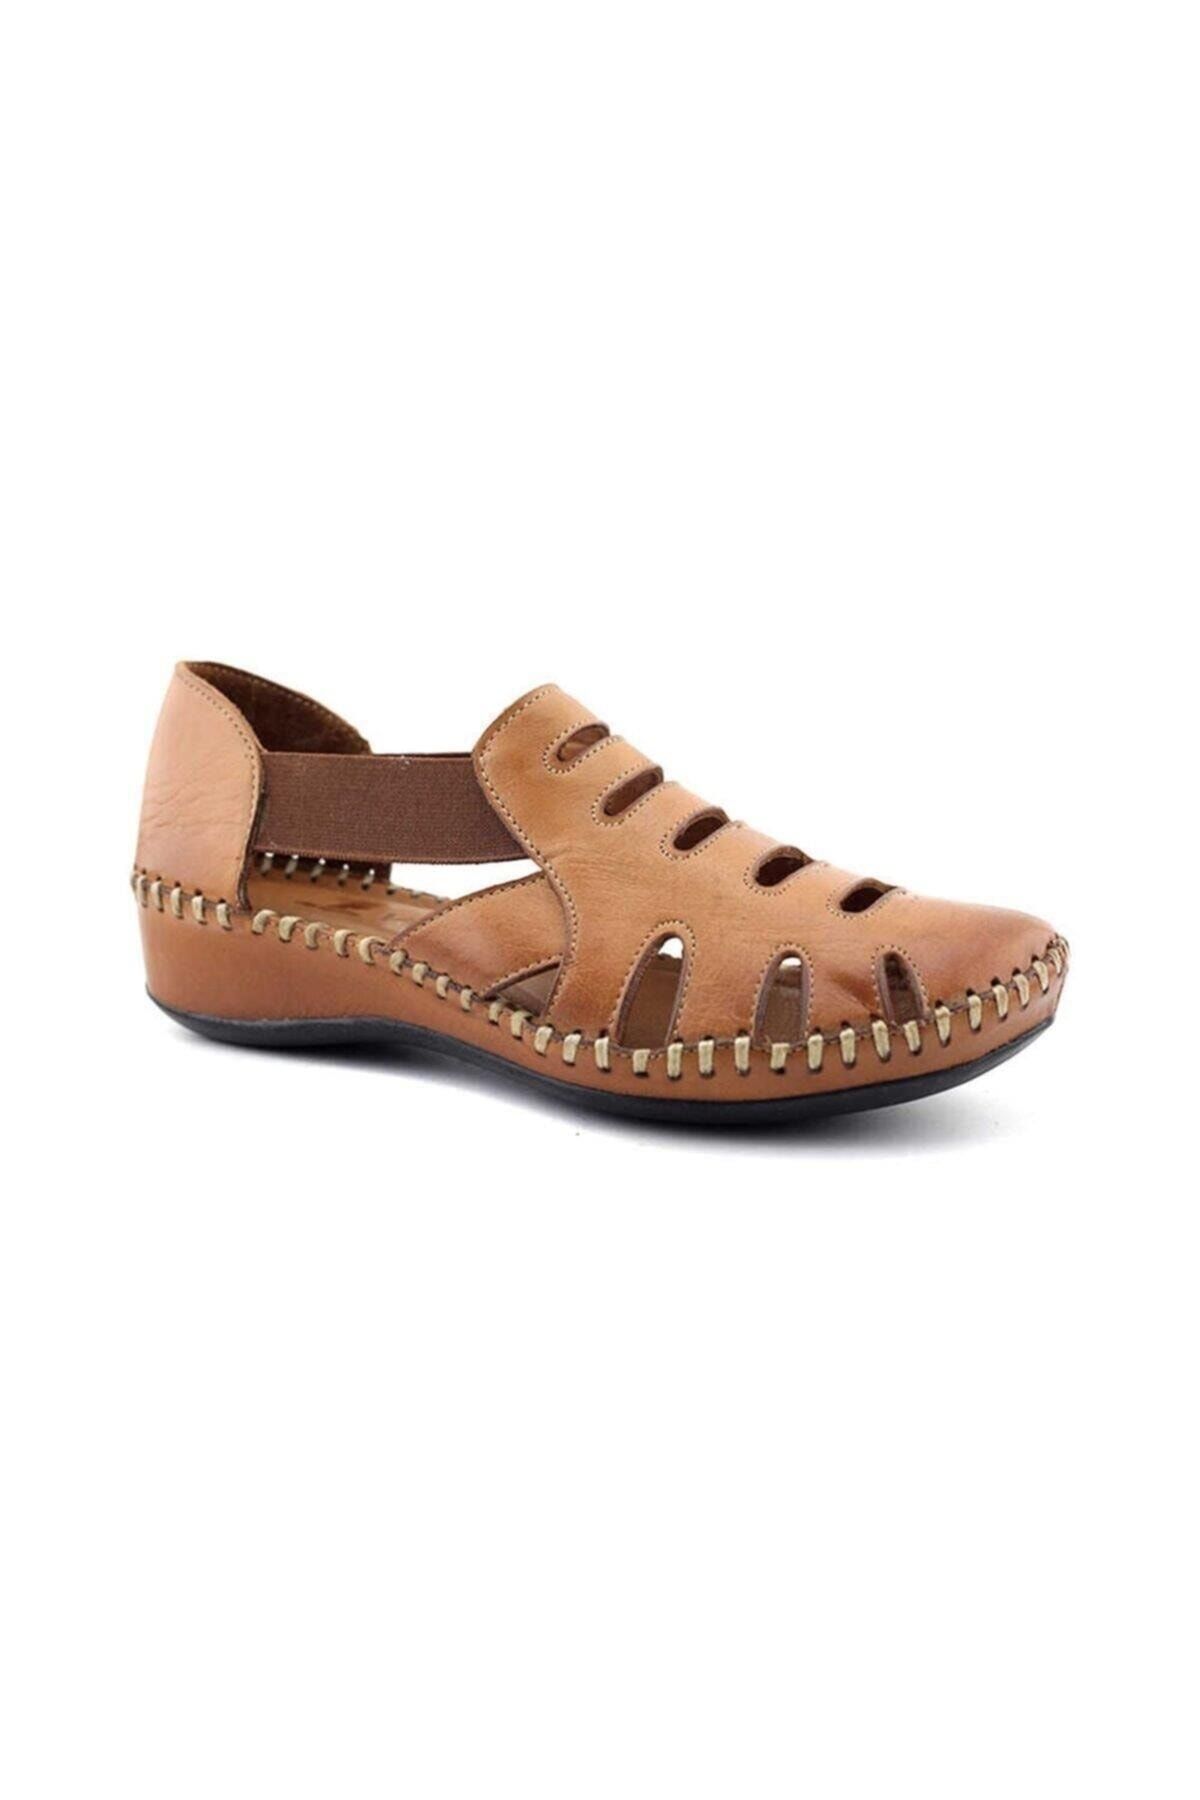 Venüs 18791395 Kadın Deri Lastikli Comfort Delikli Sandalet